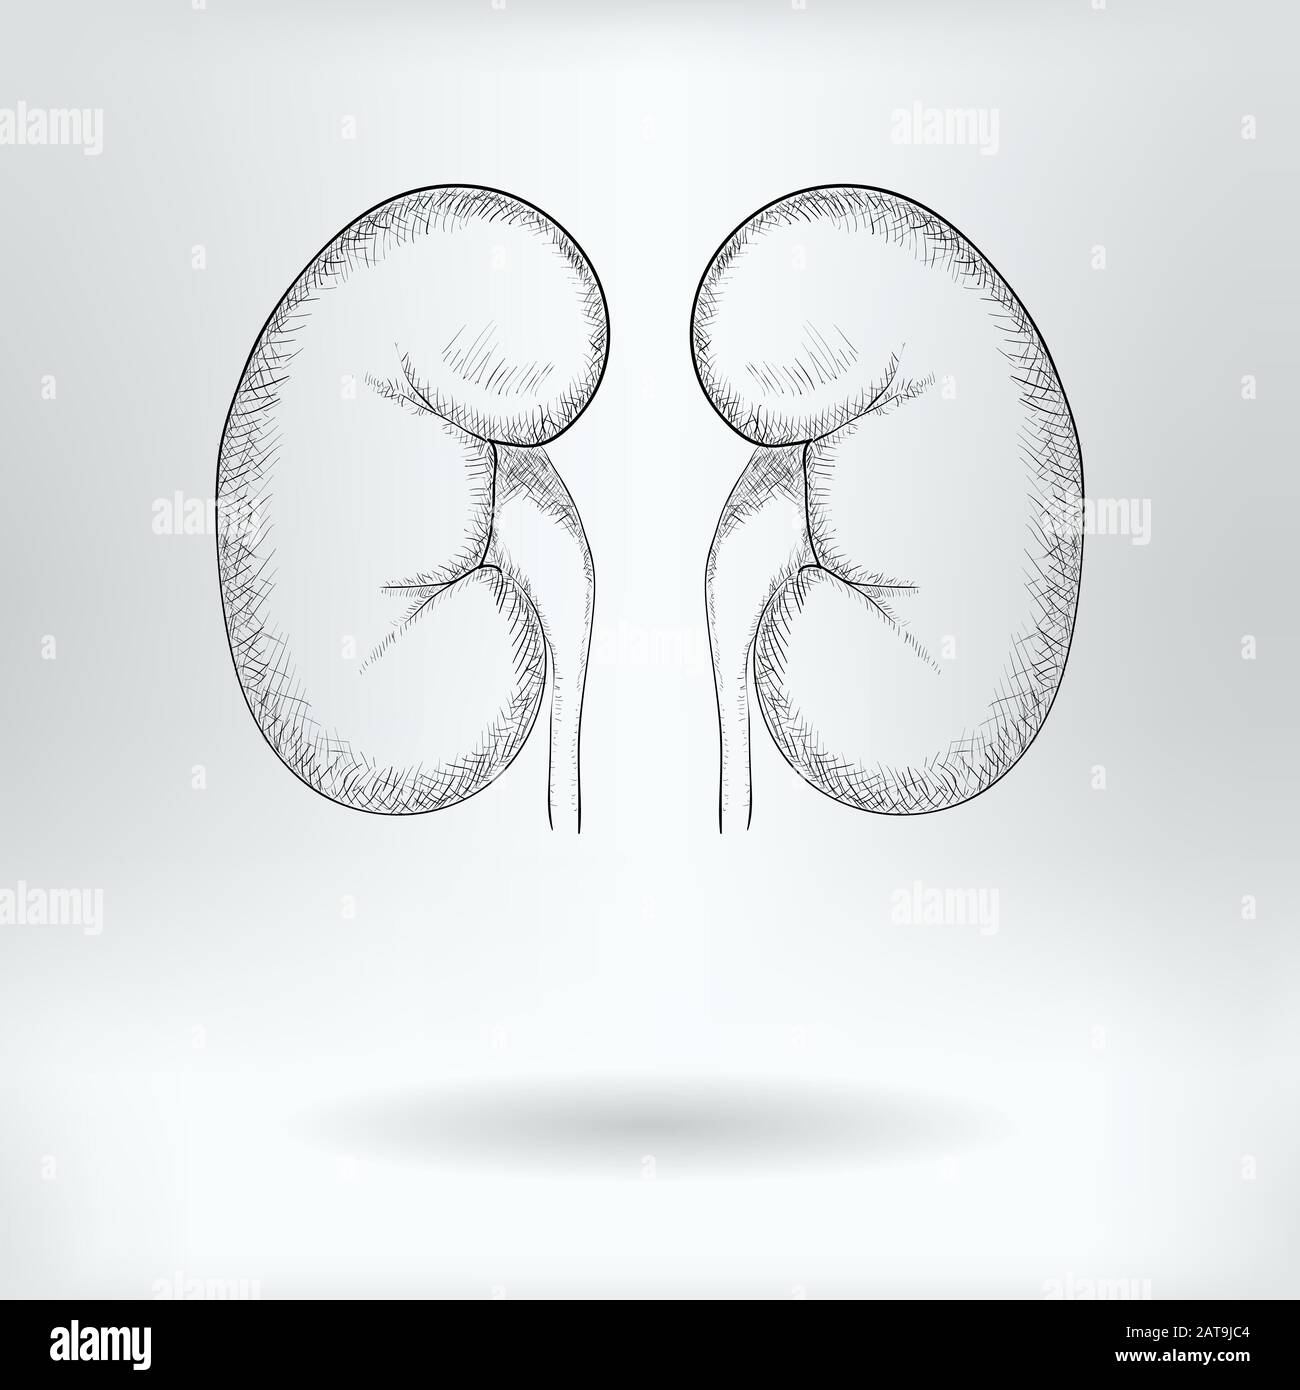 Details more than 181 sketch of kidney